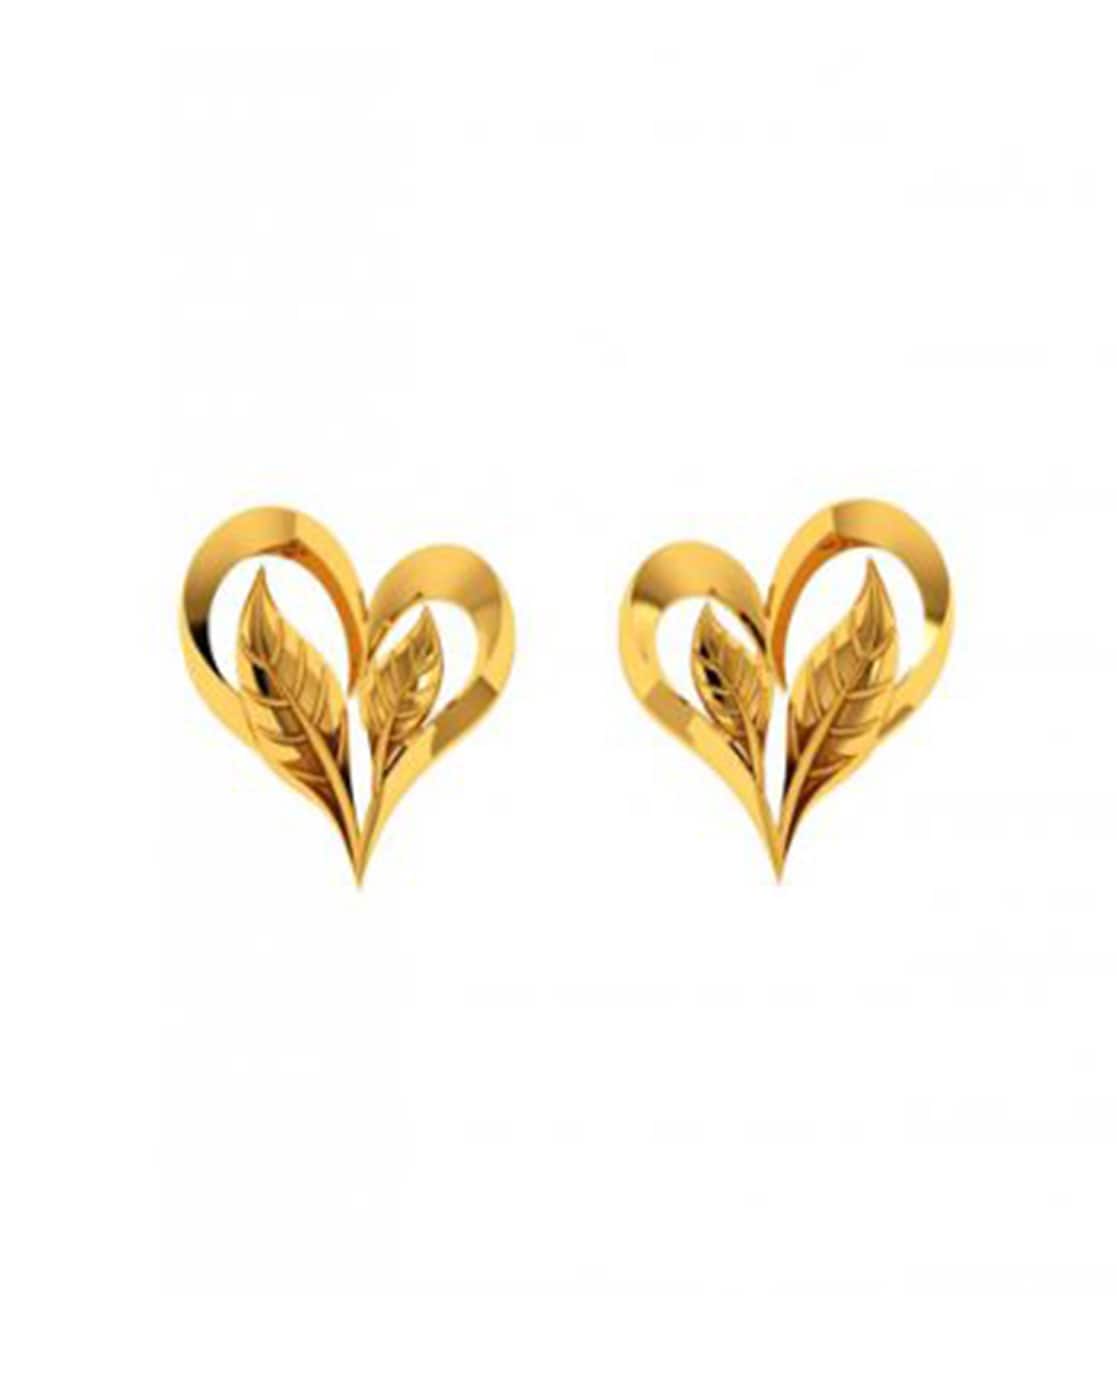 Aggregate 83+ gold earrings leaf design best - esthdonghoadian